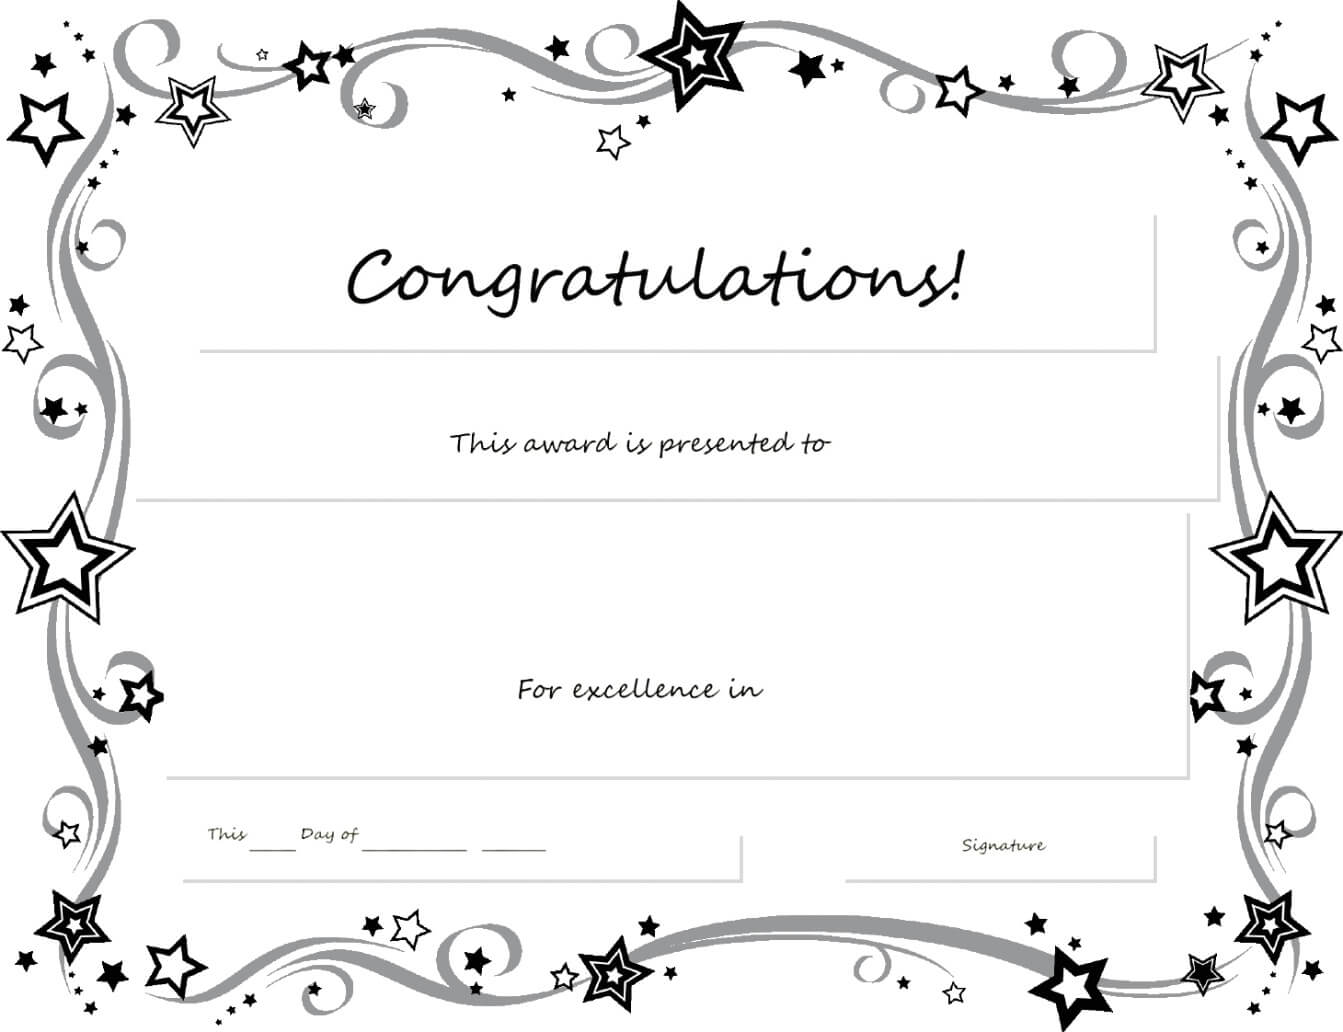 021 Template Ideas Certificate Award Microsoft Word Inside Congratulations Certificate Word Template